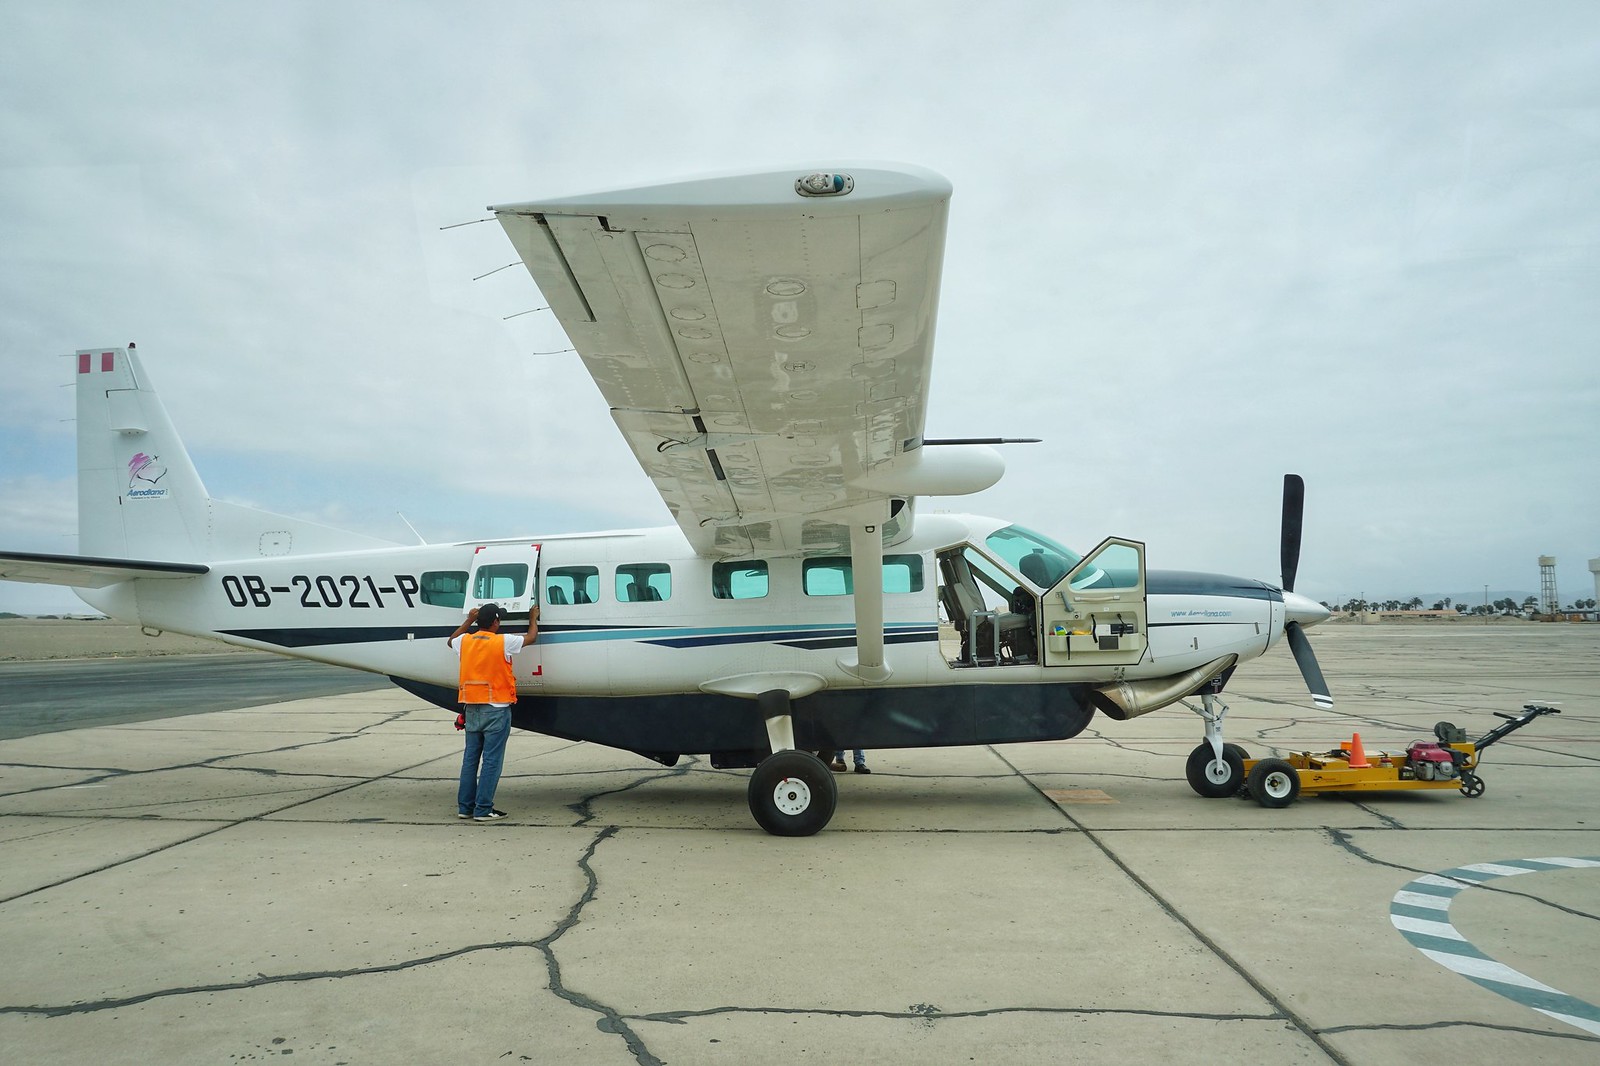 A plane for flights over the Nazca Lines, Peru